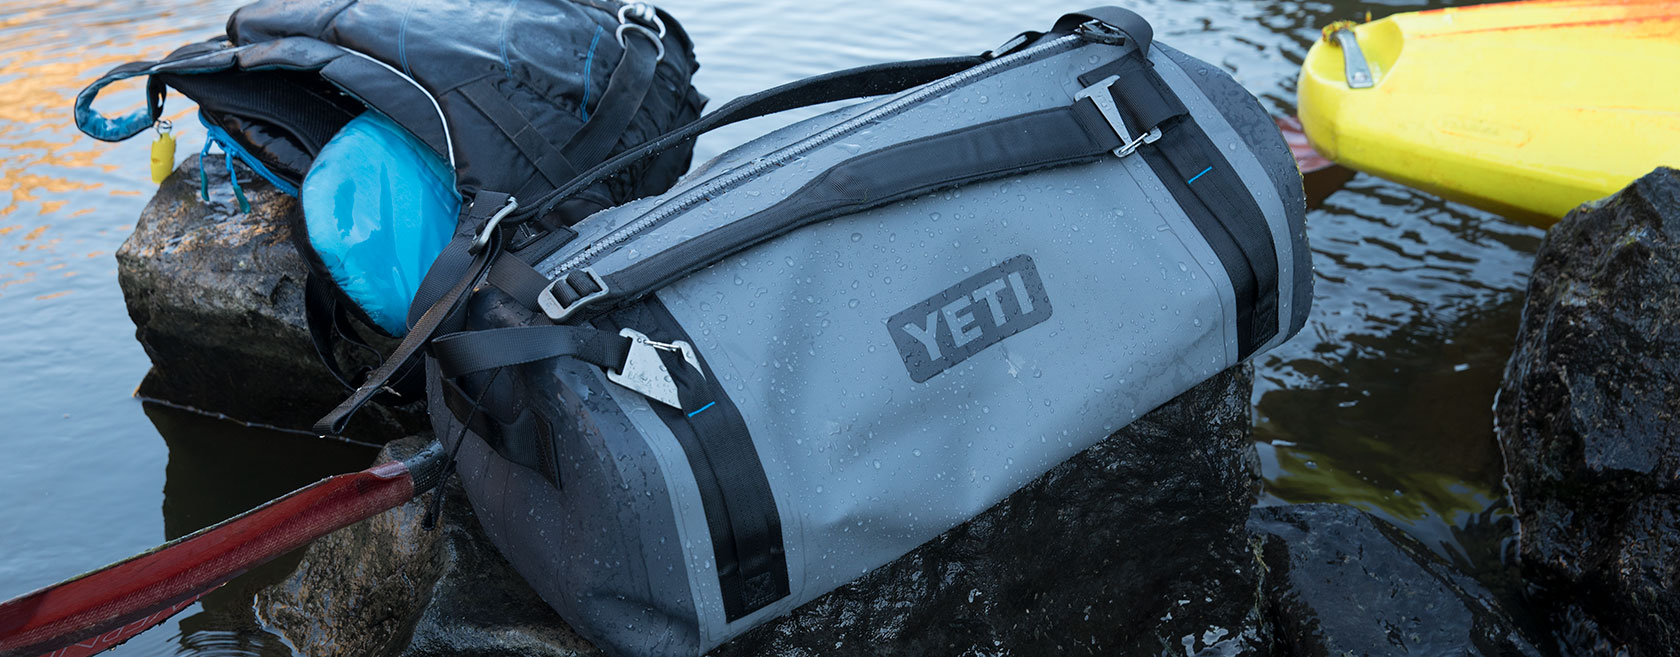 Submersible and Airtight Duffle Bag? The Yeti Panga Dry Bag